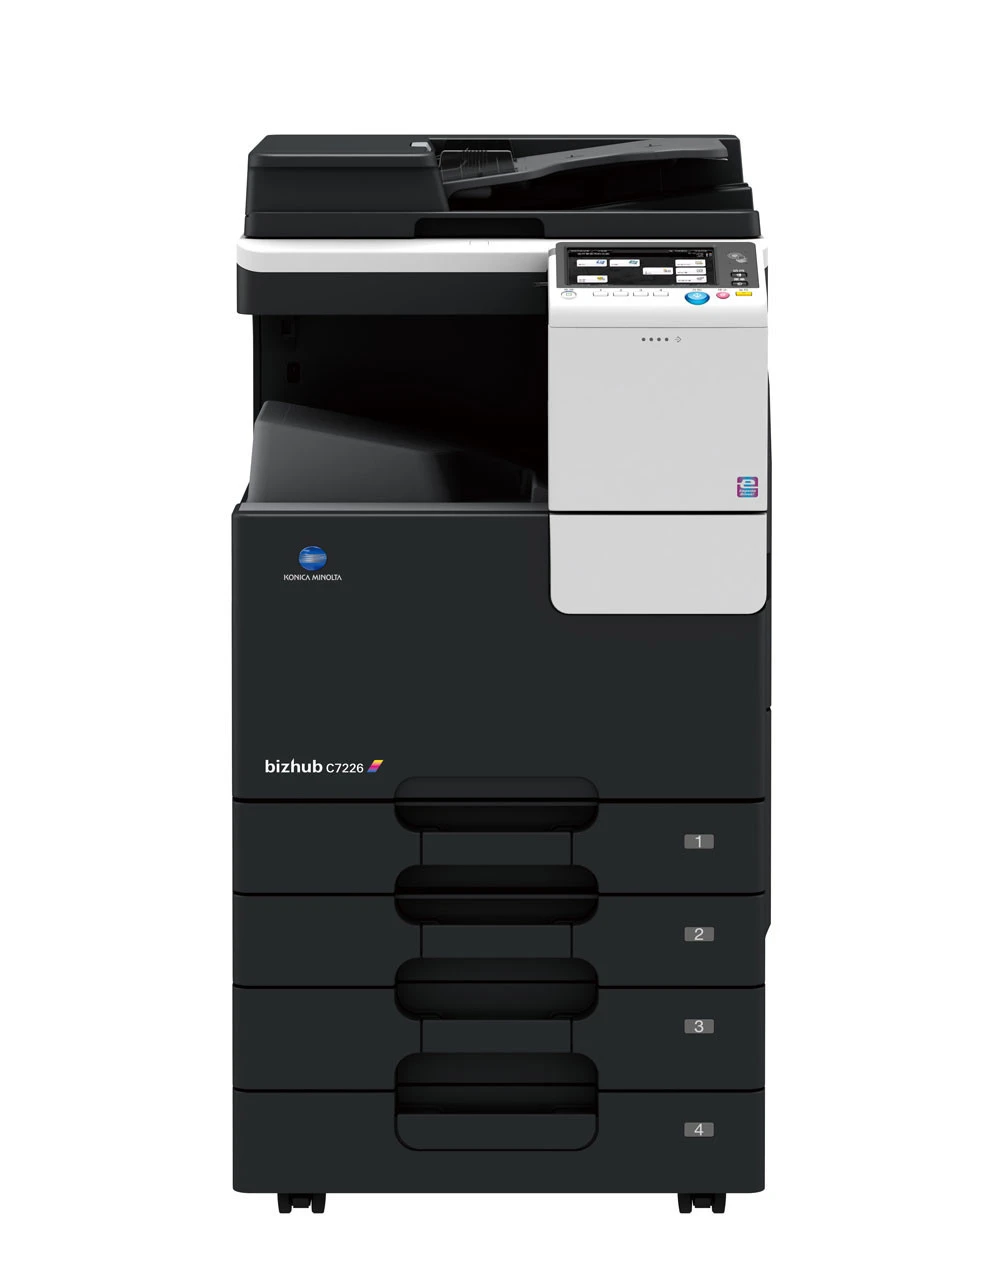 Hot sell brand new Copier  full colors Printers for Konica Minolta Bizhub C7222 C7226 copier machine